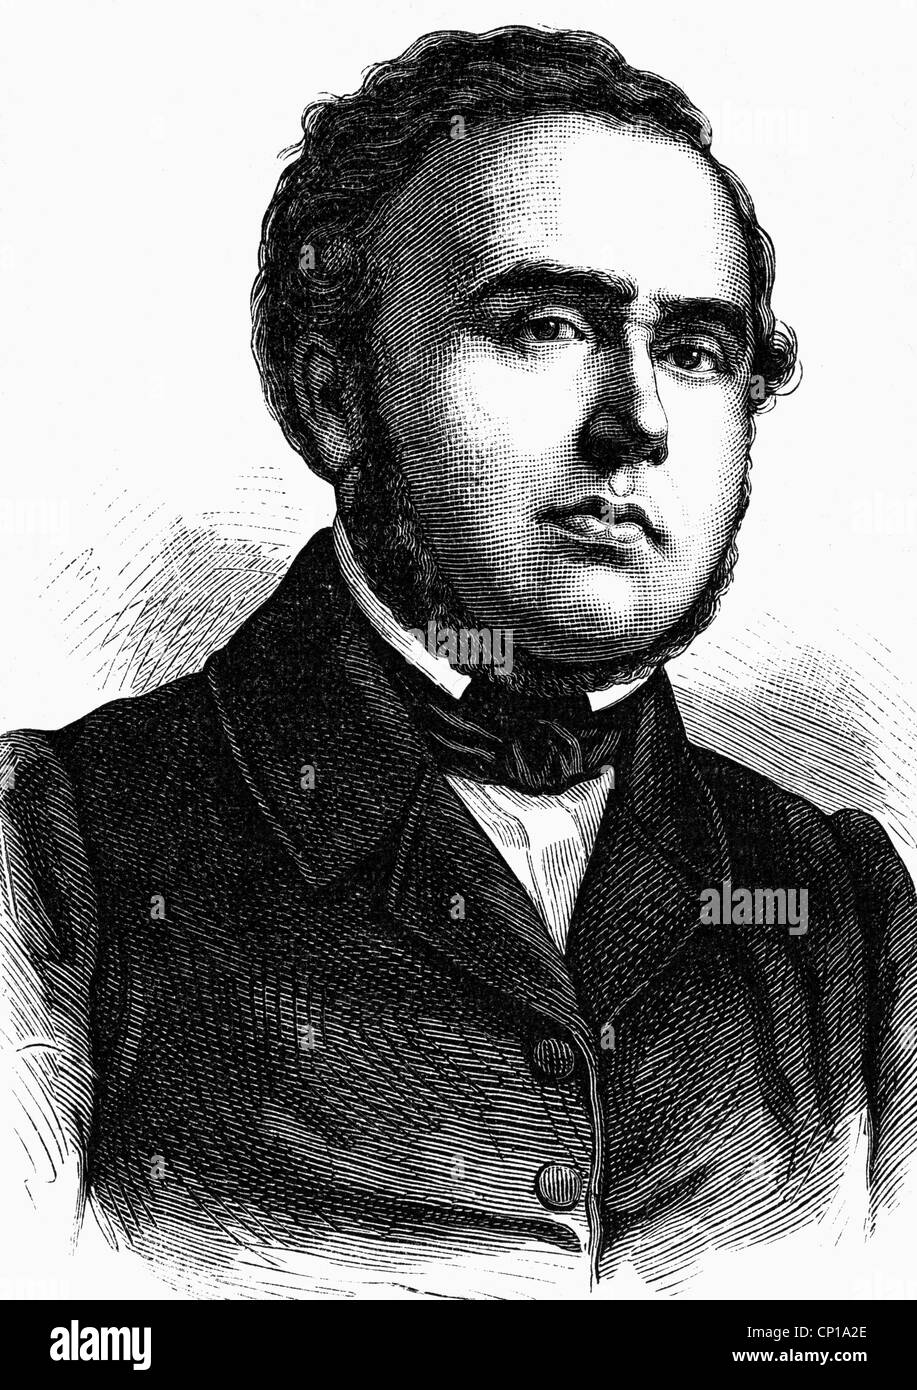 Ledru-Rollin, Alexandre Auguste, 2.2.1807 - 31.12.1874, French jurist and politician, portrait, wood engraving, circa 1850, Stock Photo